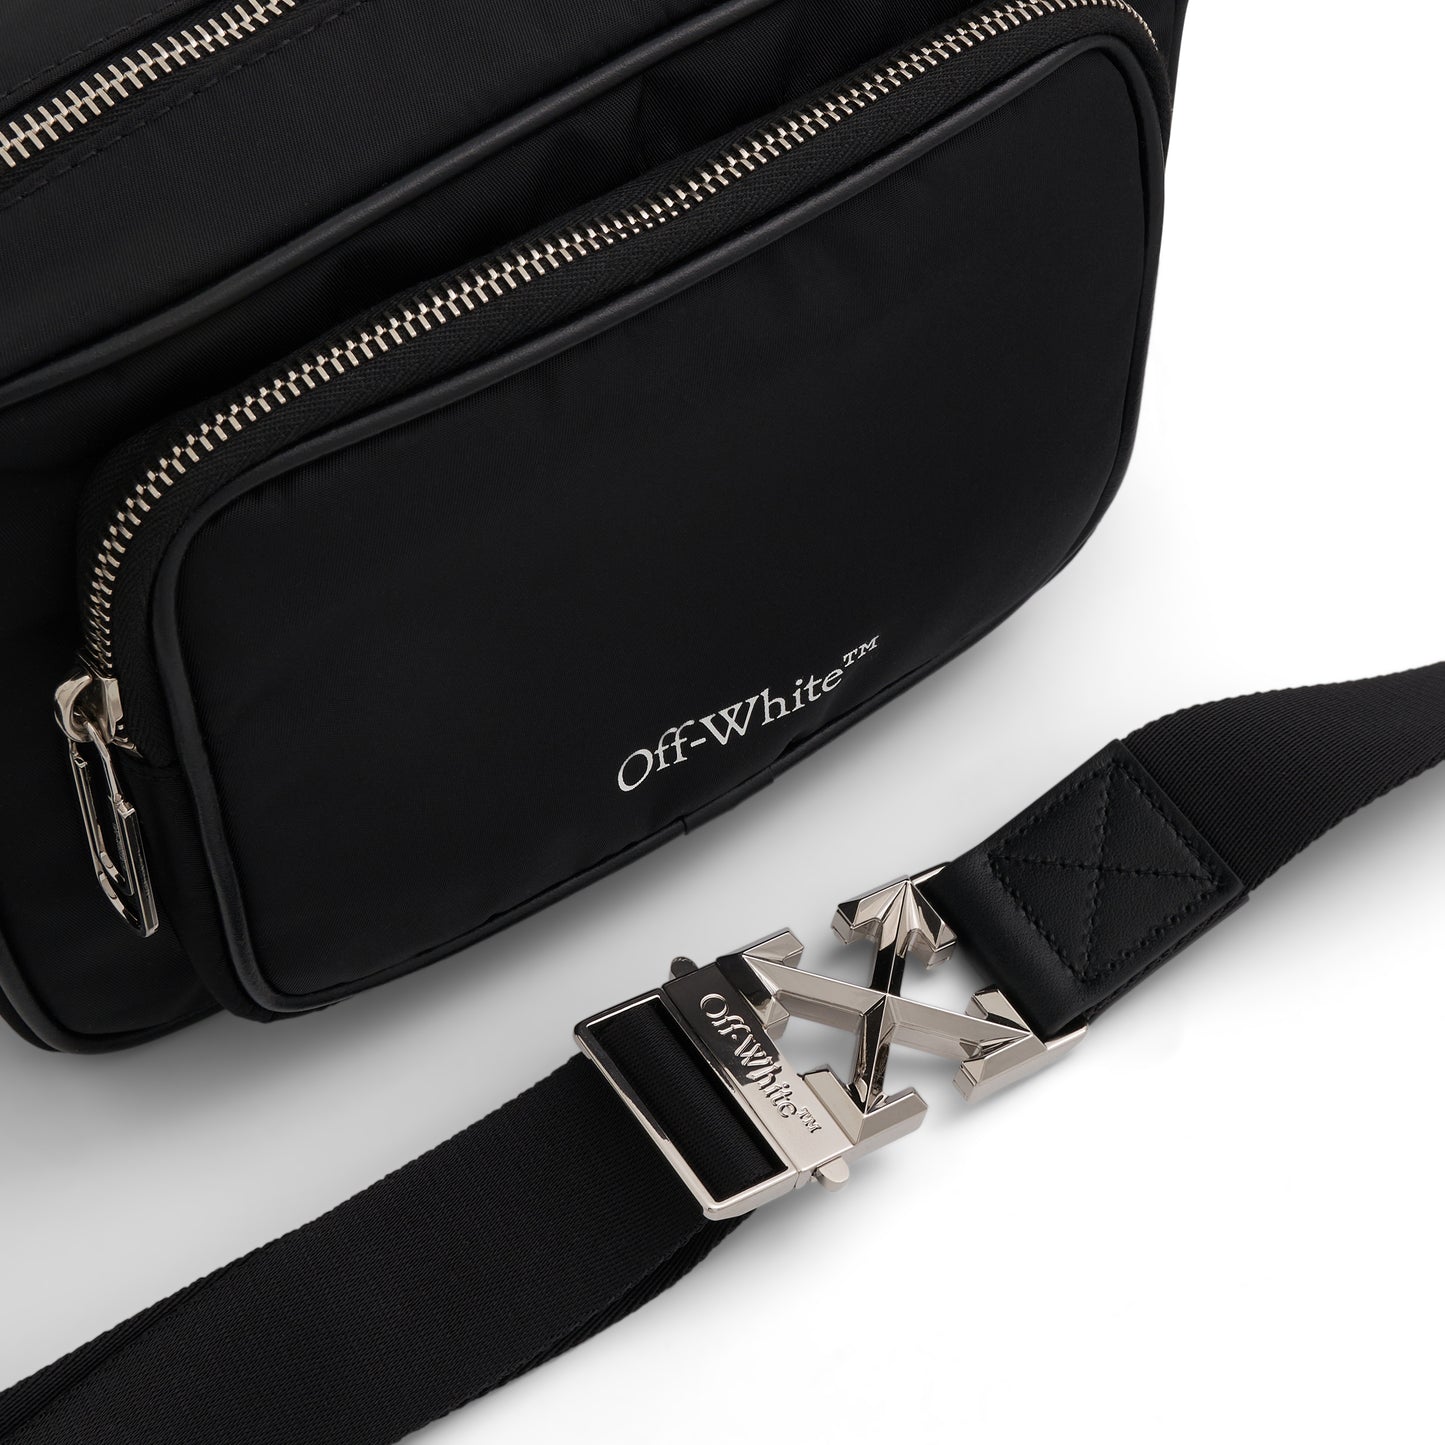 Arrow Tuc Camera Bag in Black